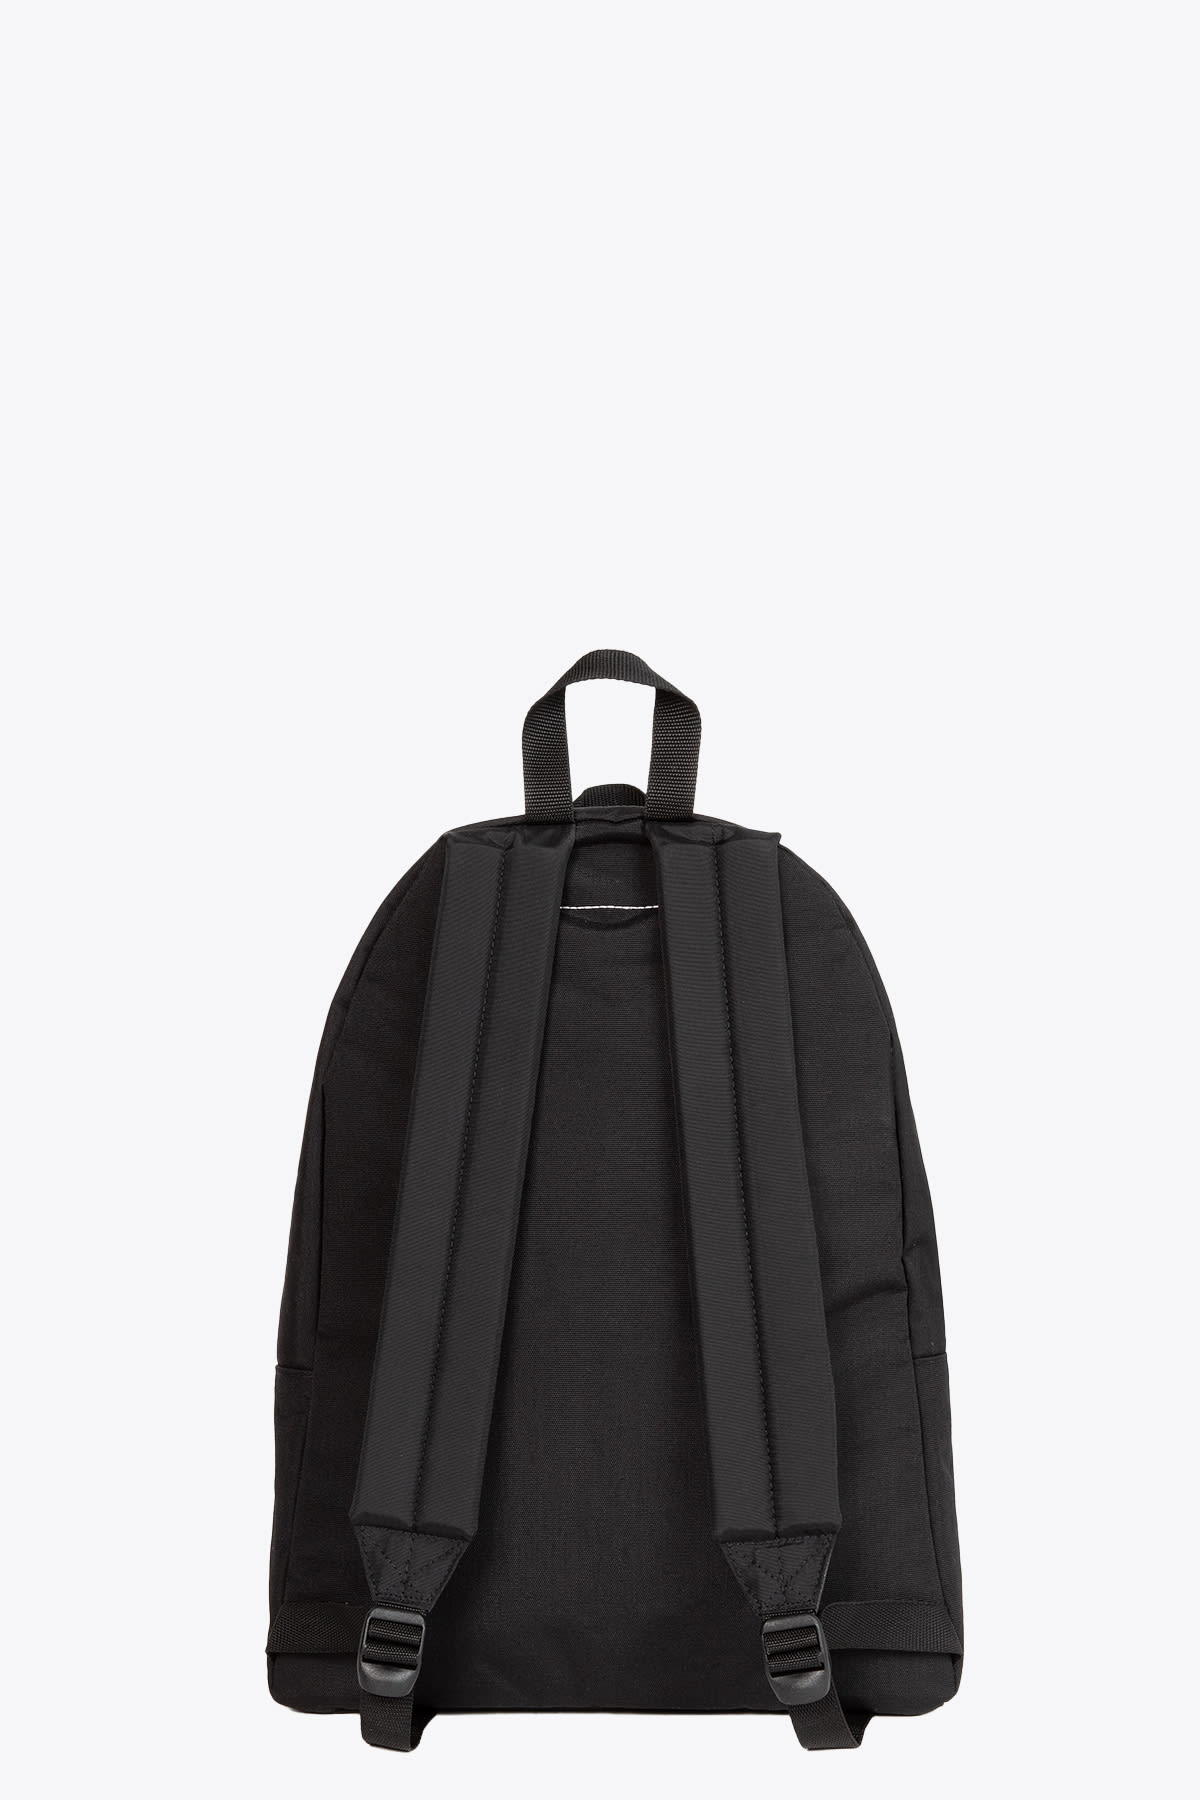 MM6 Maison Margiela Oversized Backpack Black nylon oversized backpack Eastpak collabpration